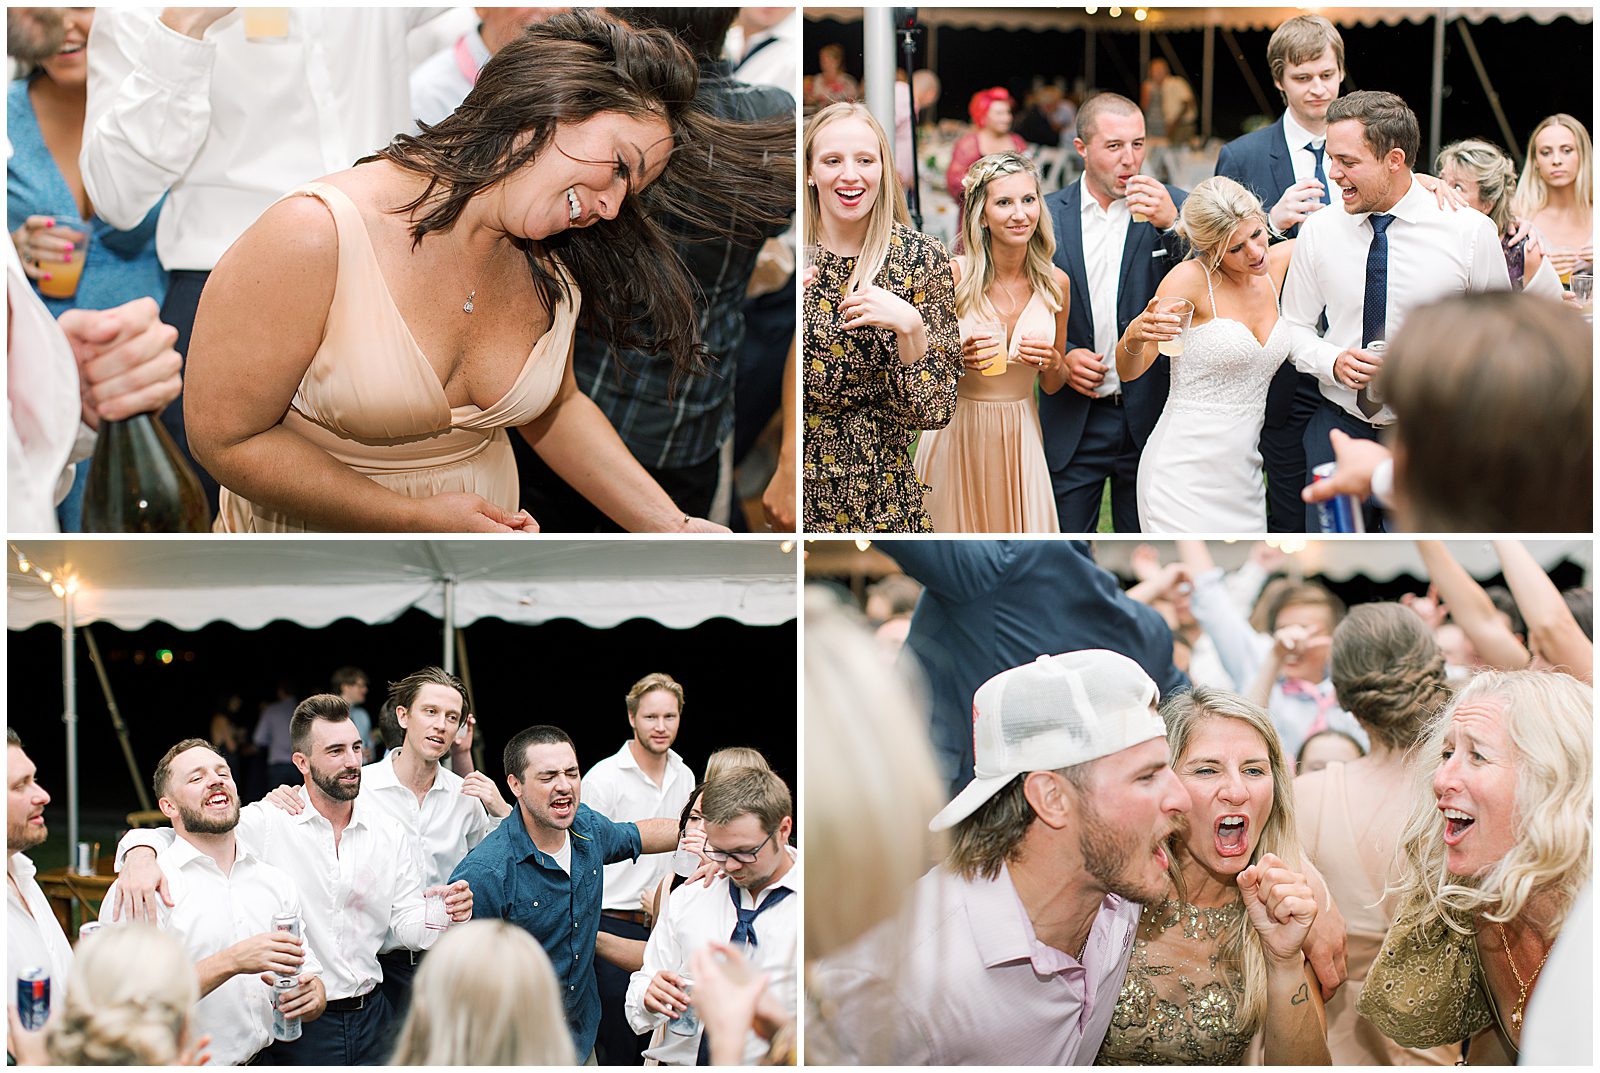 Wedding Reception Party Dancing Photos